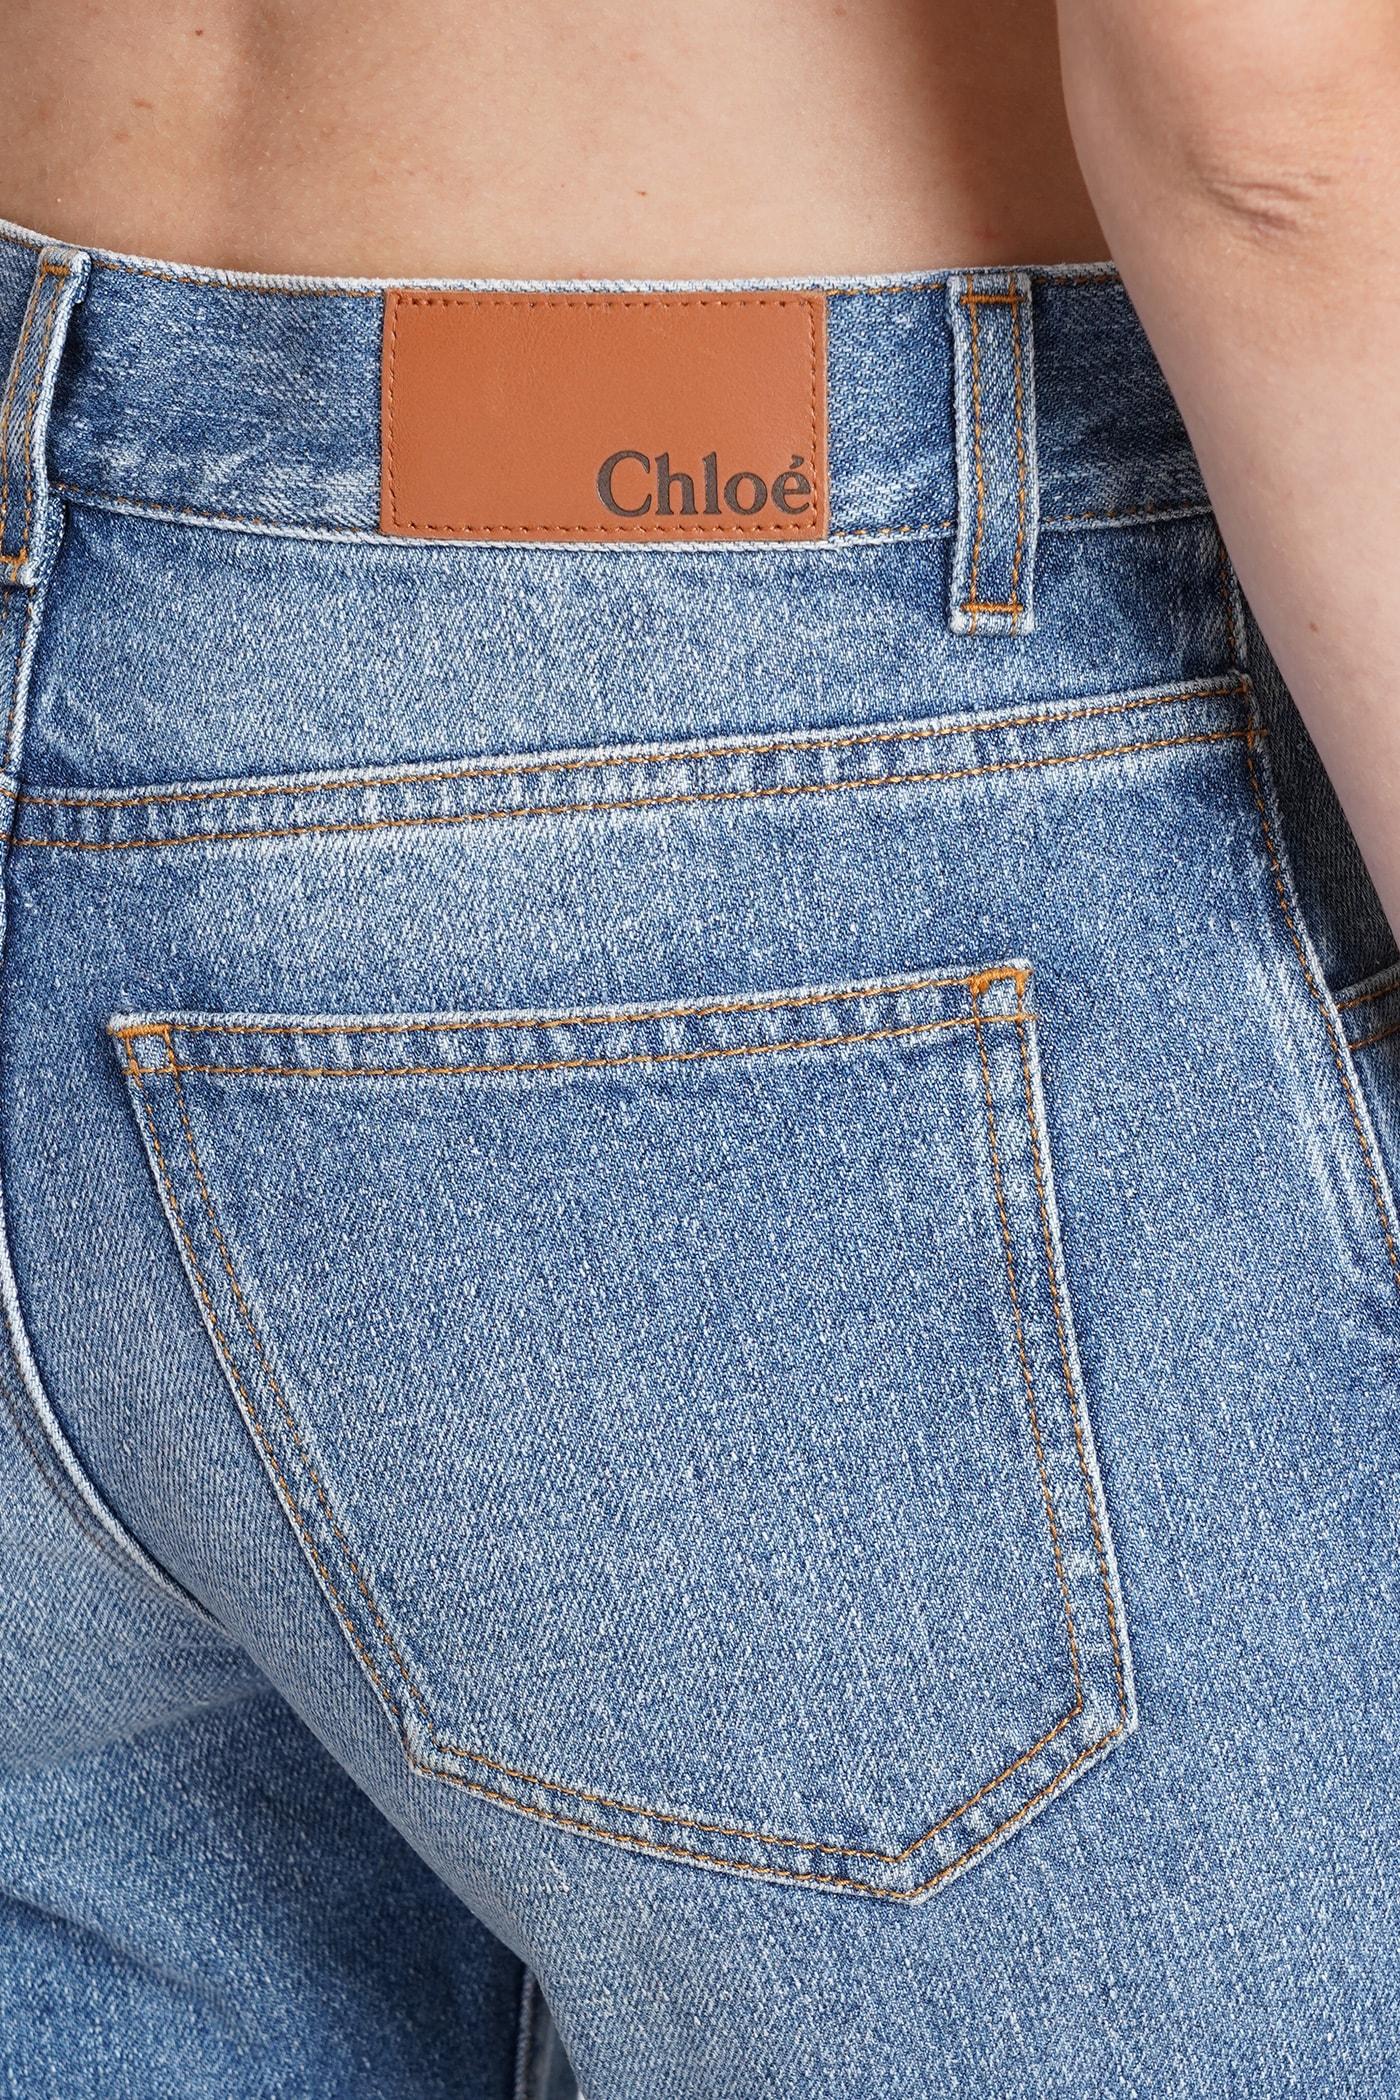 Chloé Jeans In Blue Cotton | Lyst